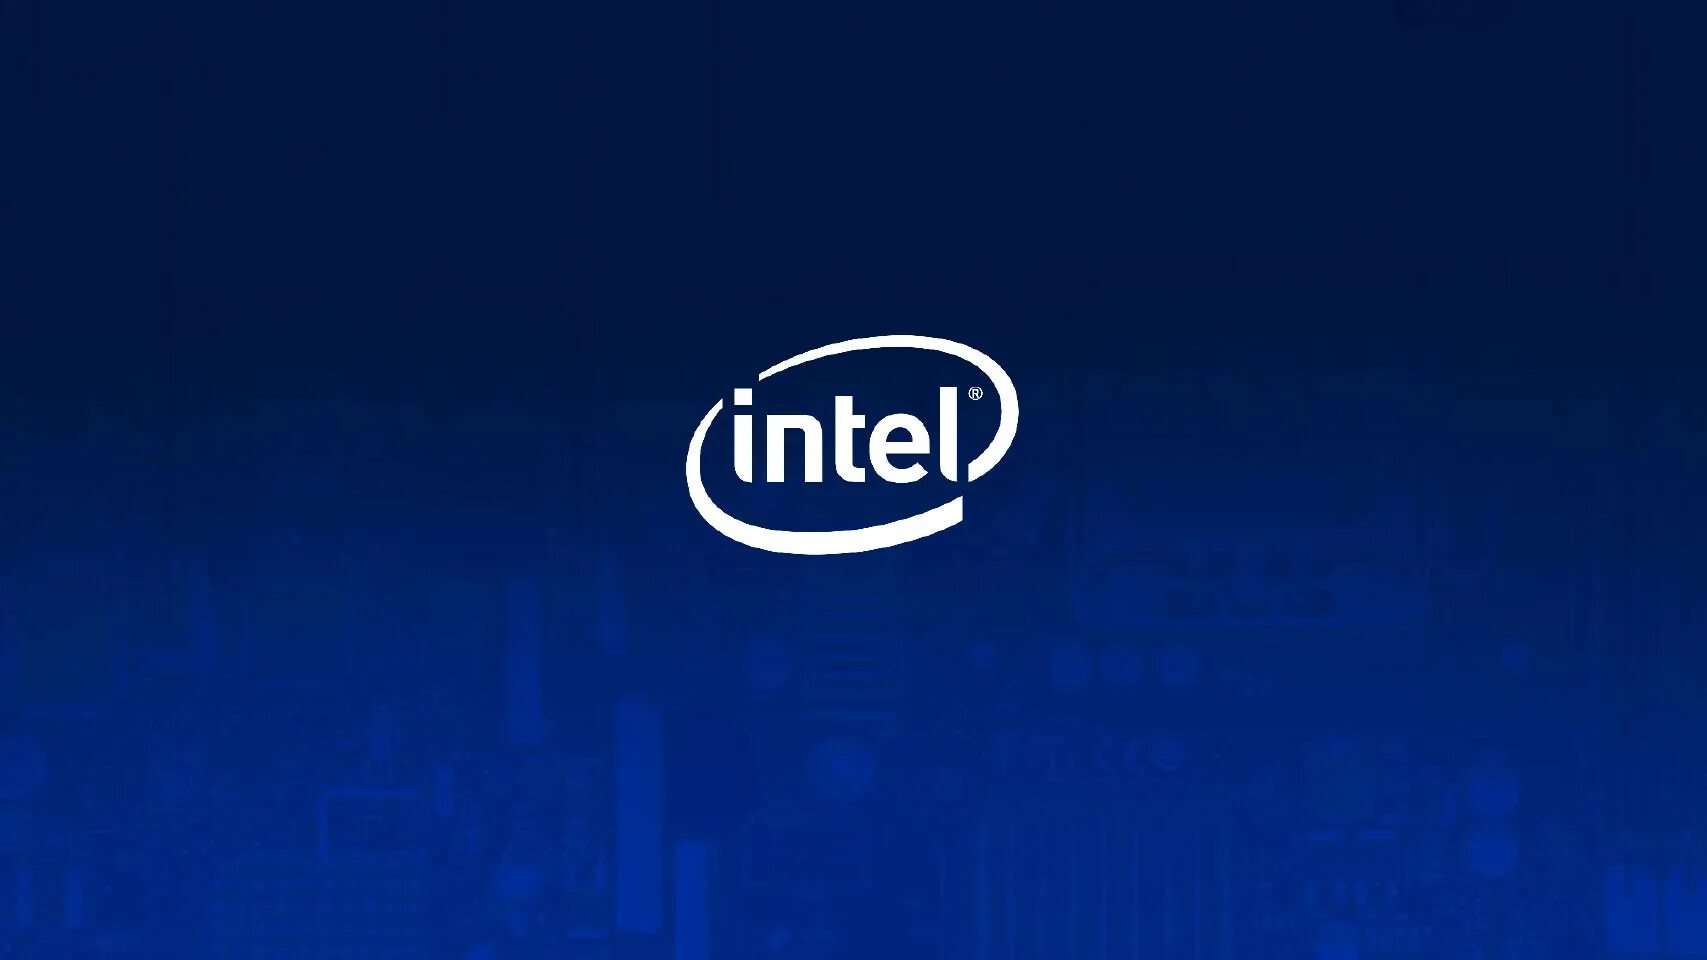 Обои Intel Core i5. Логотип Intel. Intel обложка. Слоган Интел. Reg intel